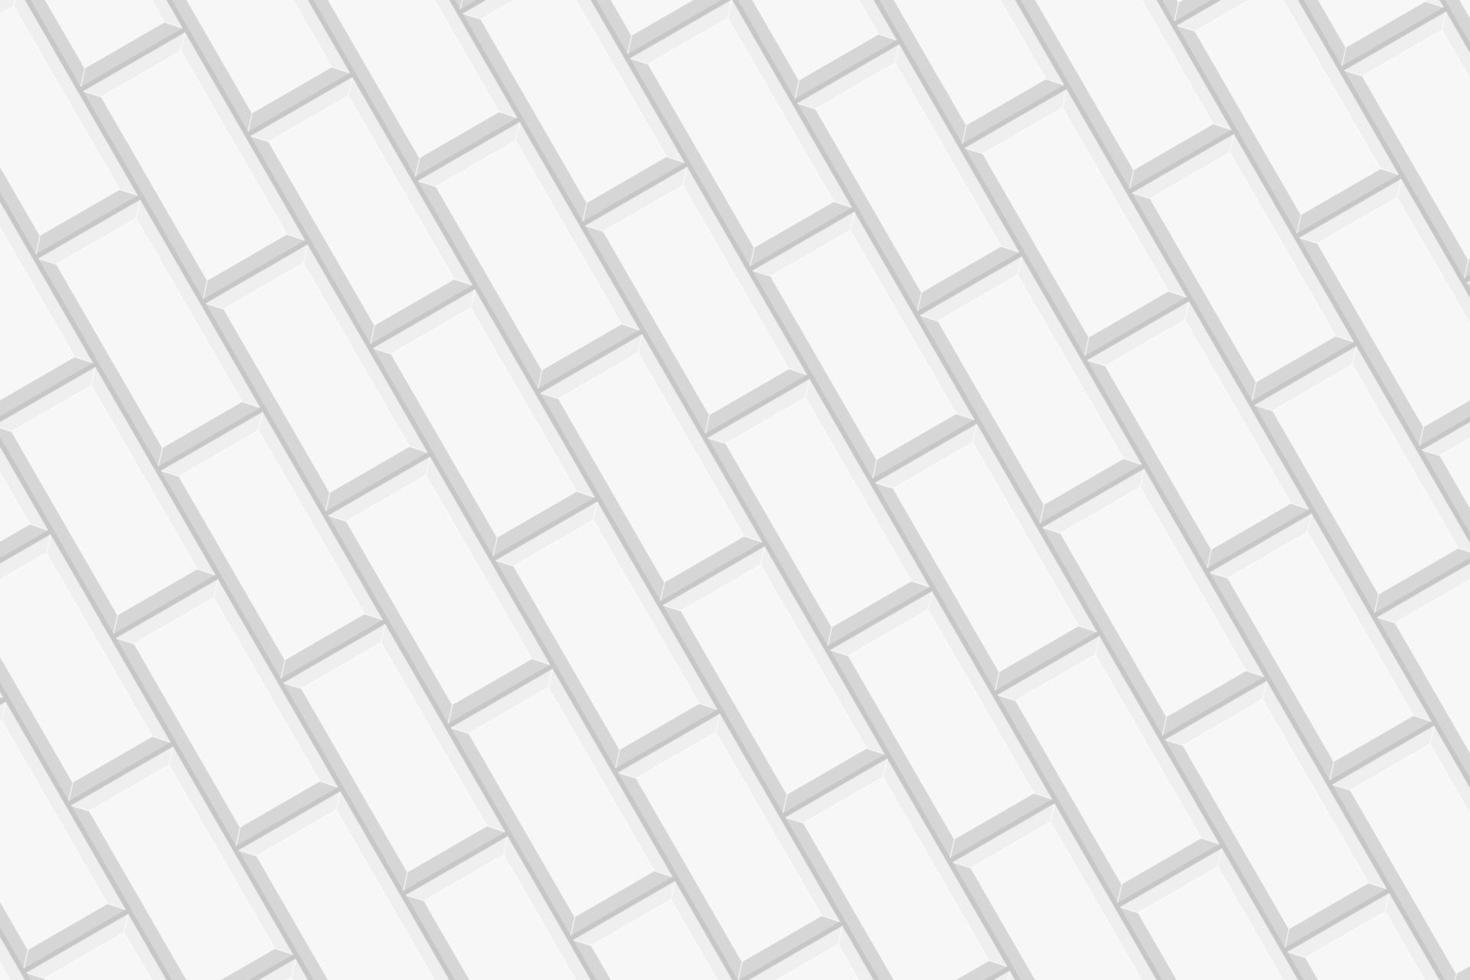 White rectangles tile in diagonal arrangement. Ceramic or stone brick wall background. Kitchen backsplash or bathroom floor seamless pattern. Facade exterior texture vector